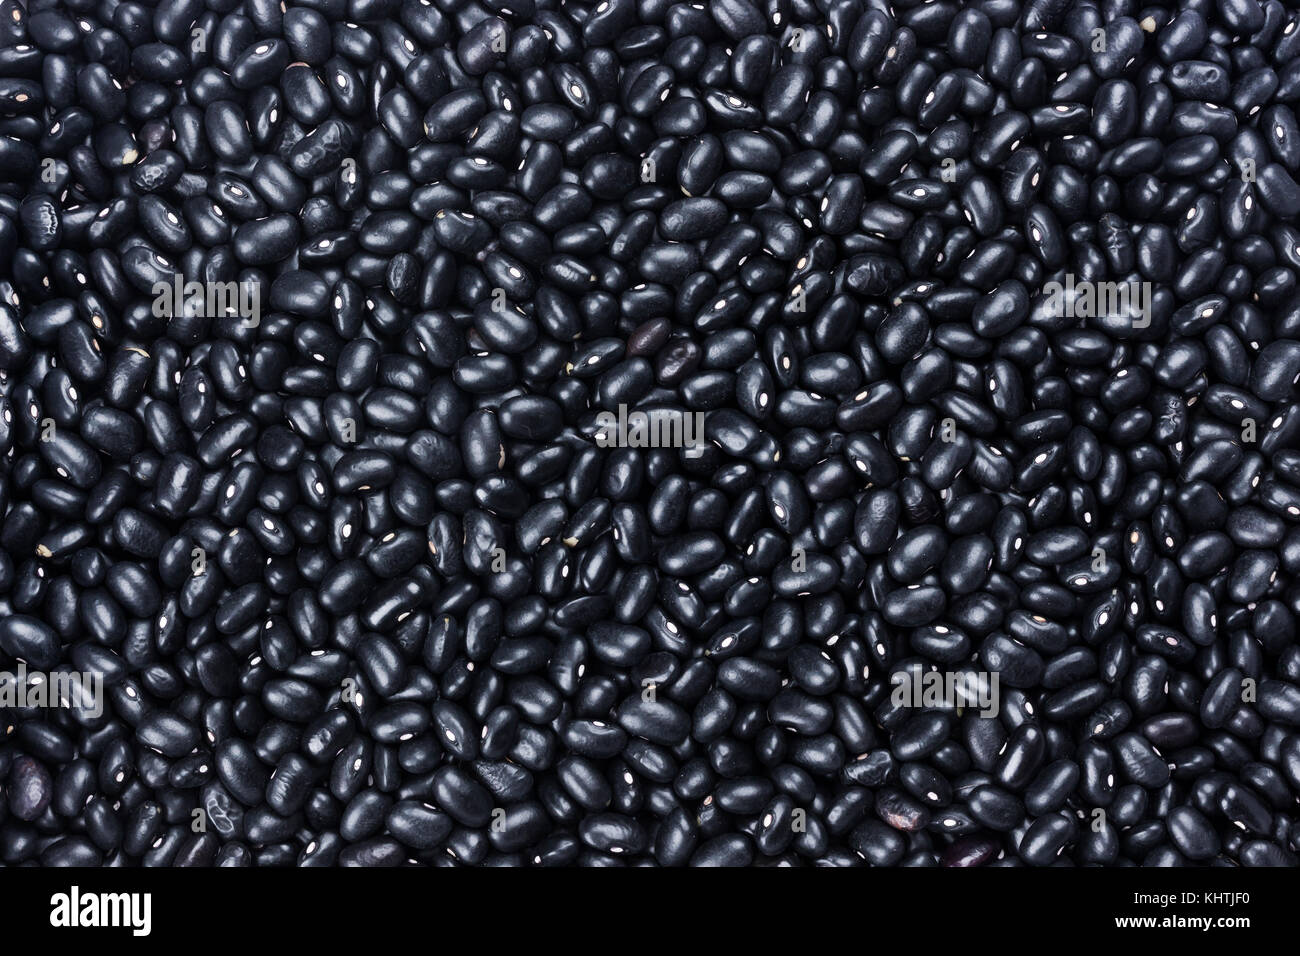 Black kidney beans background. Bean pattern Stock Photo